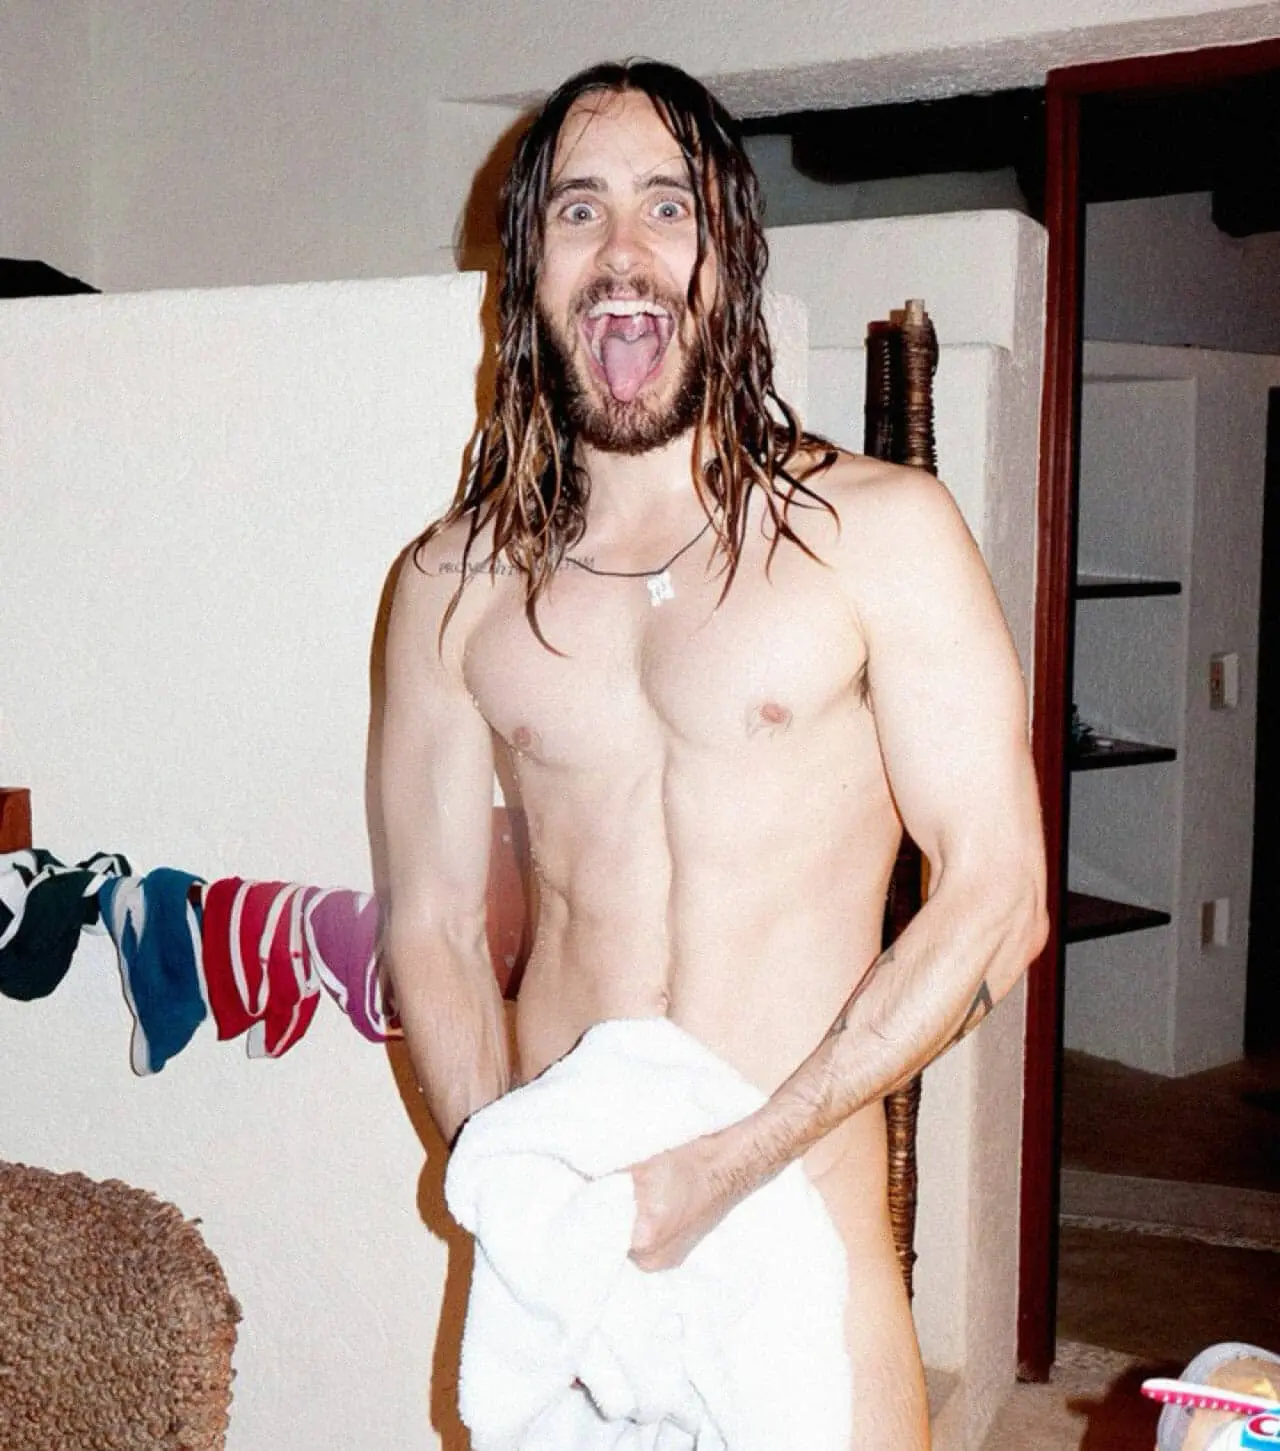 Jared Leto nude pic.